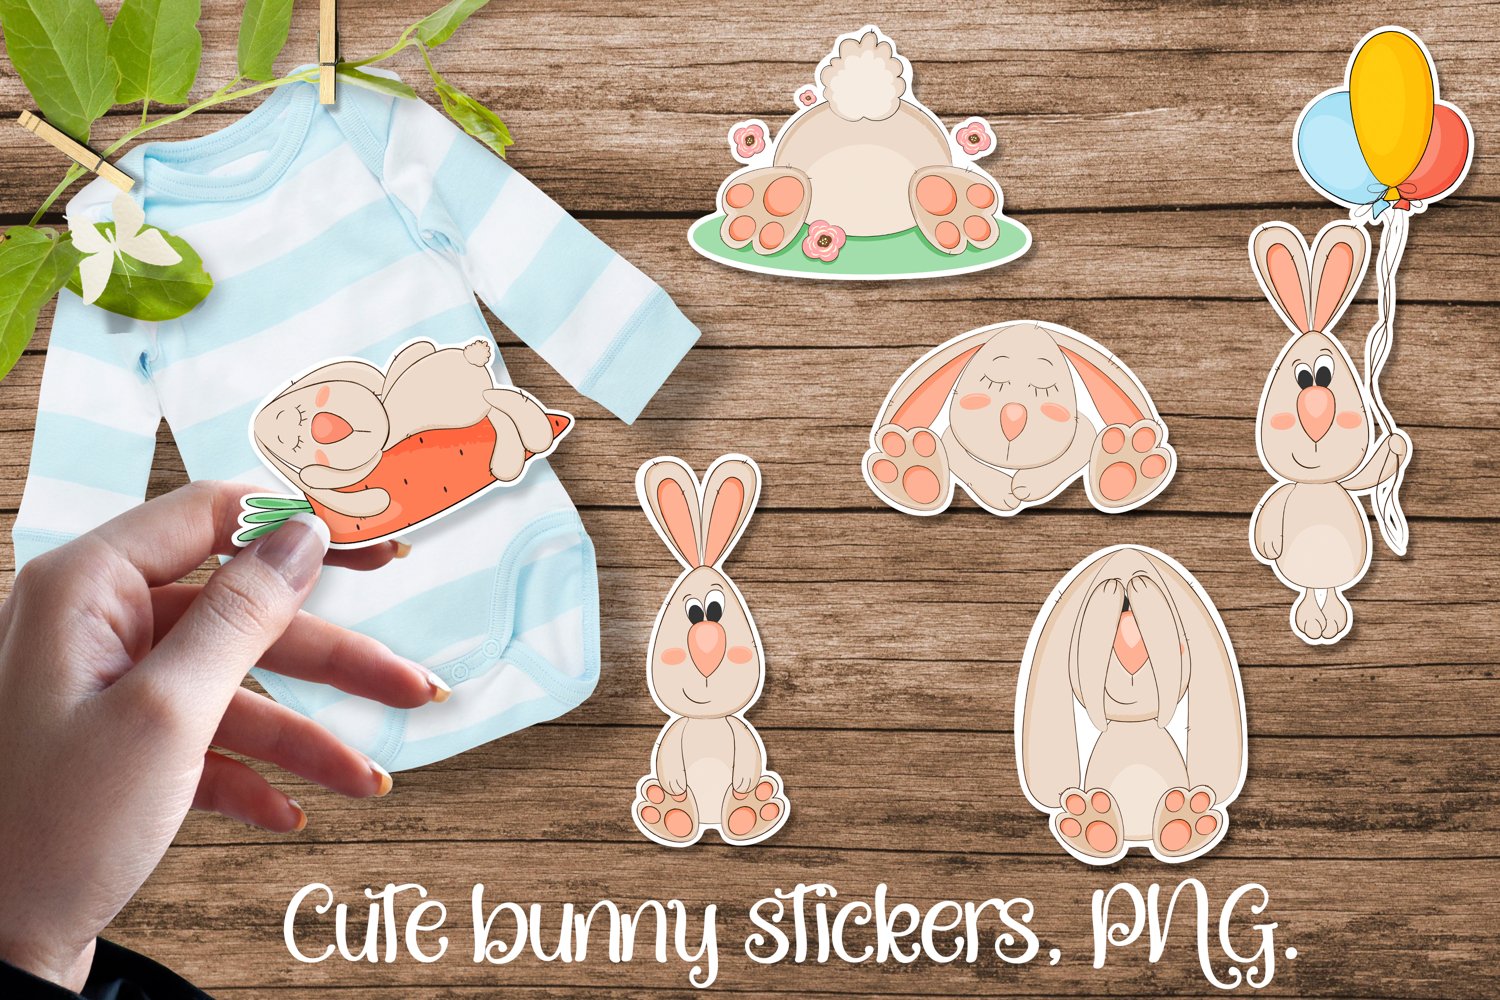 Cute bunny stickers.